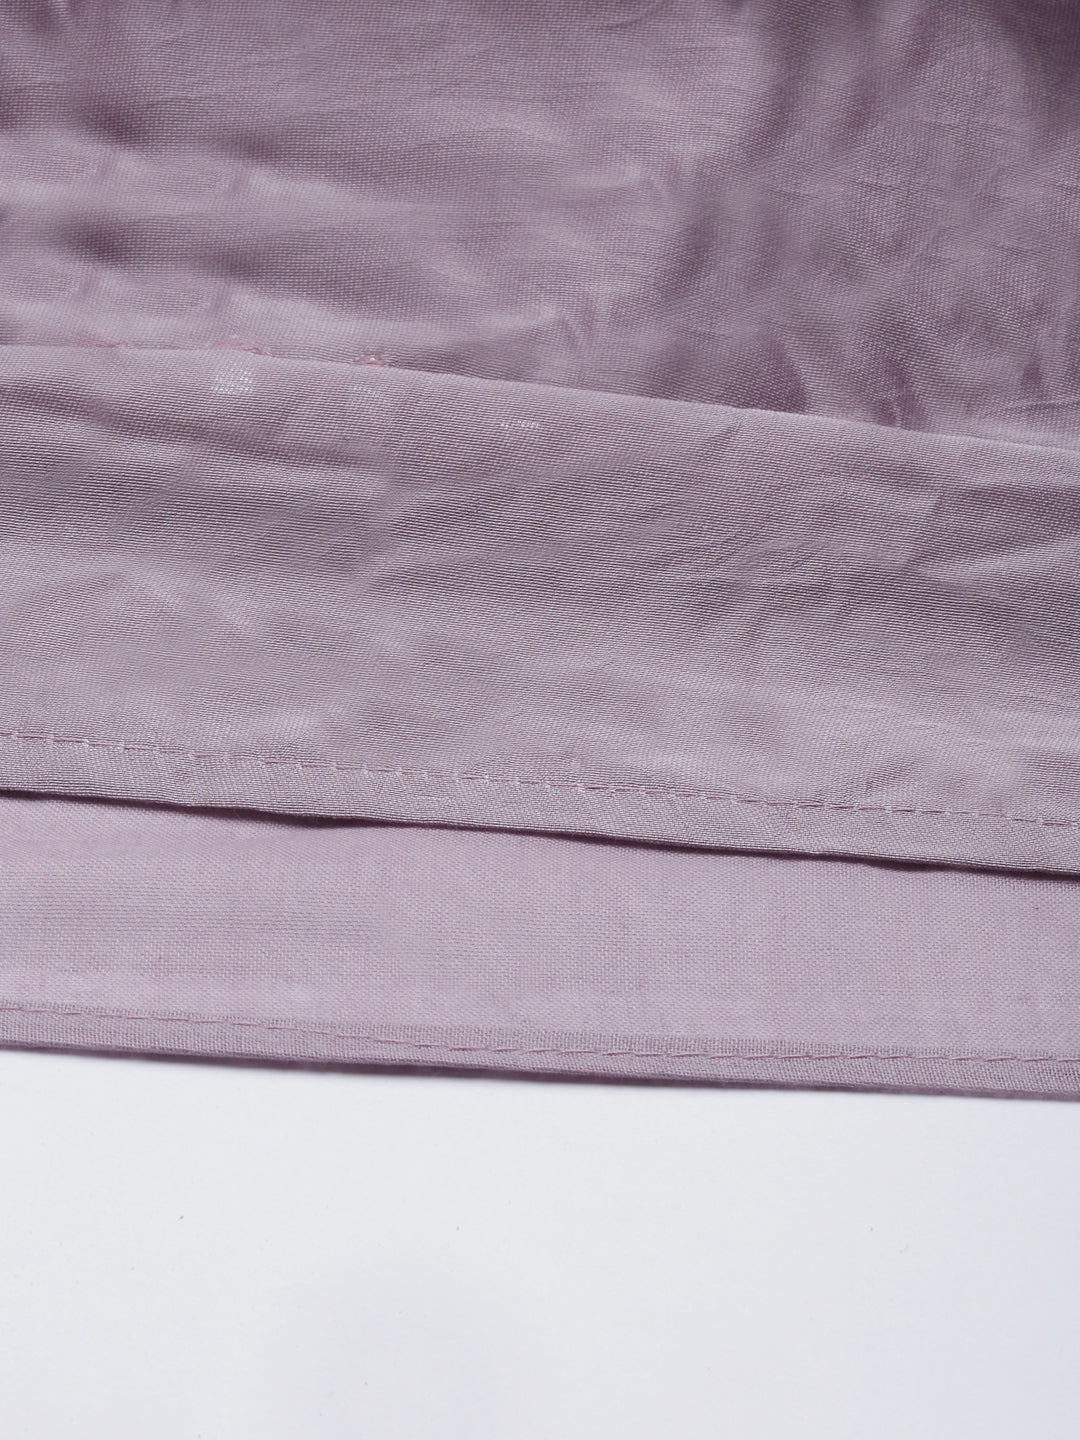 Neeru's Lavender Color Tussar Fabric Kurta